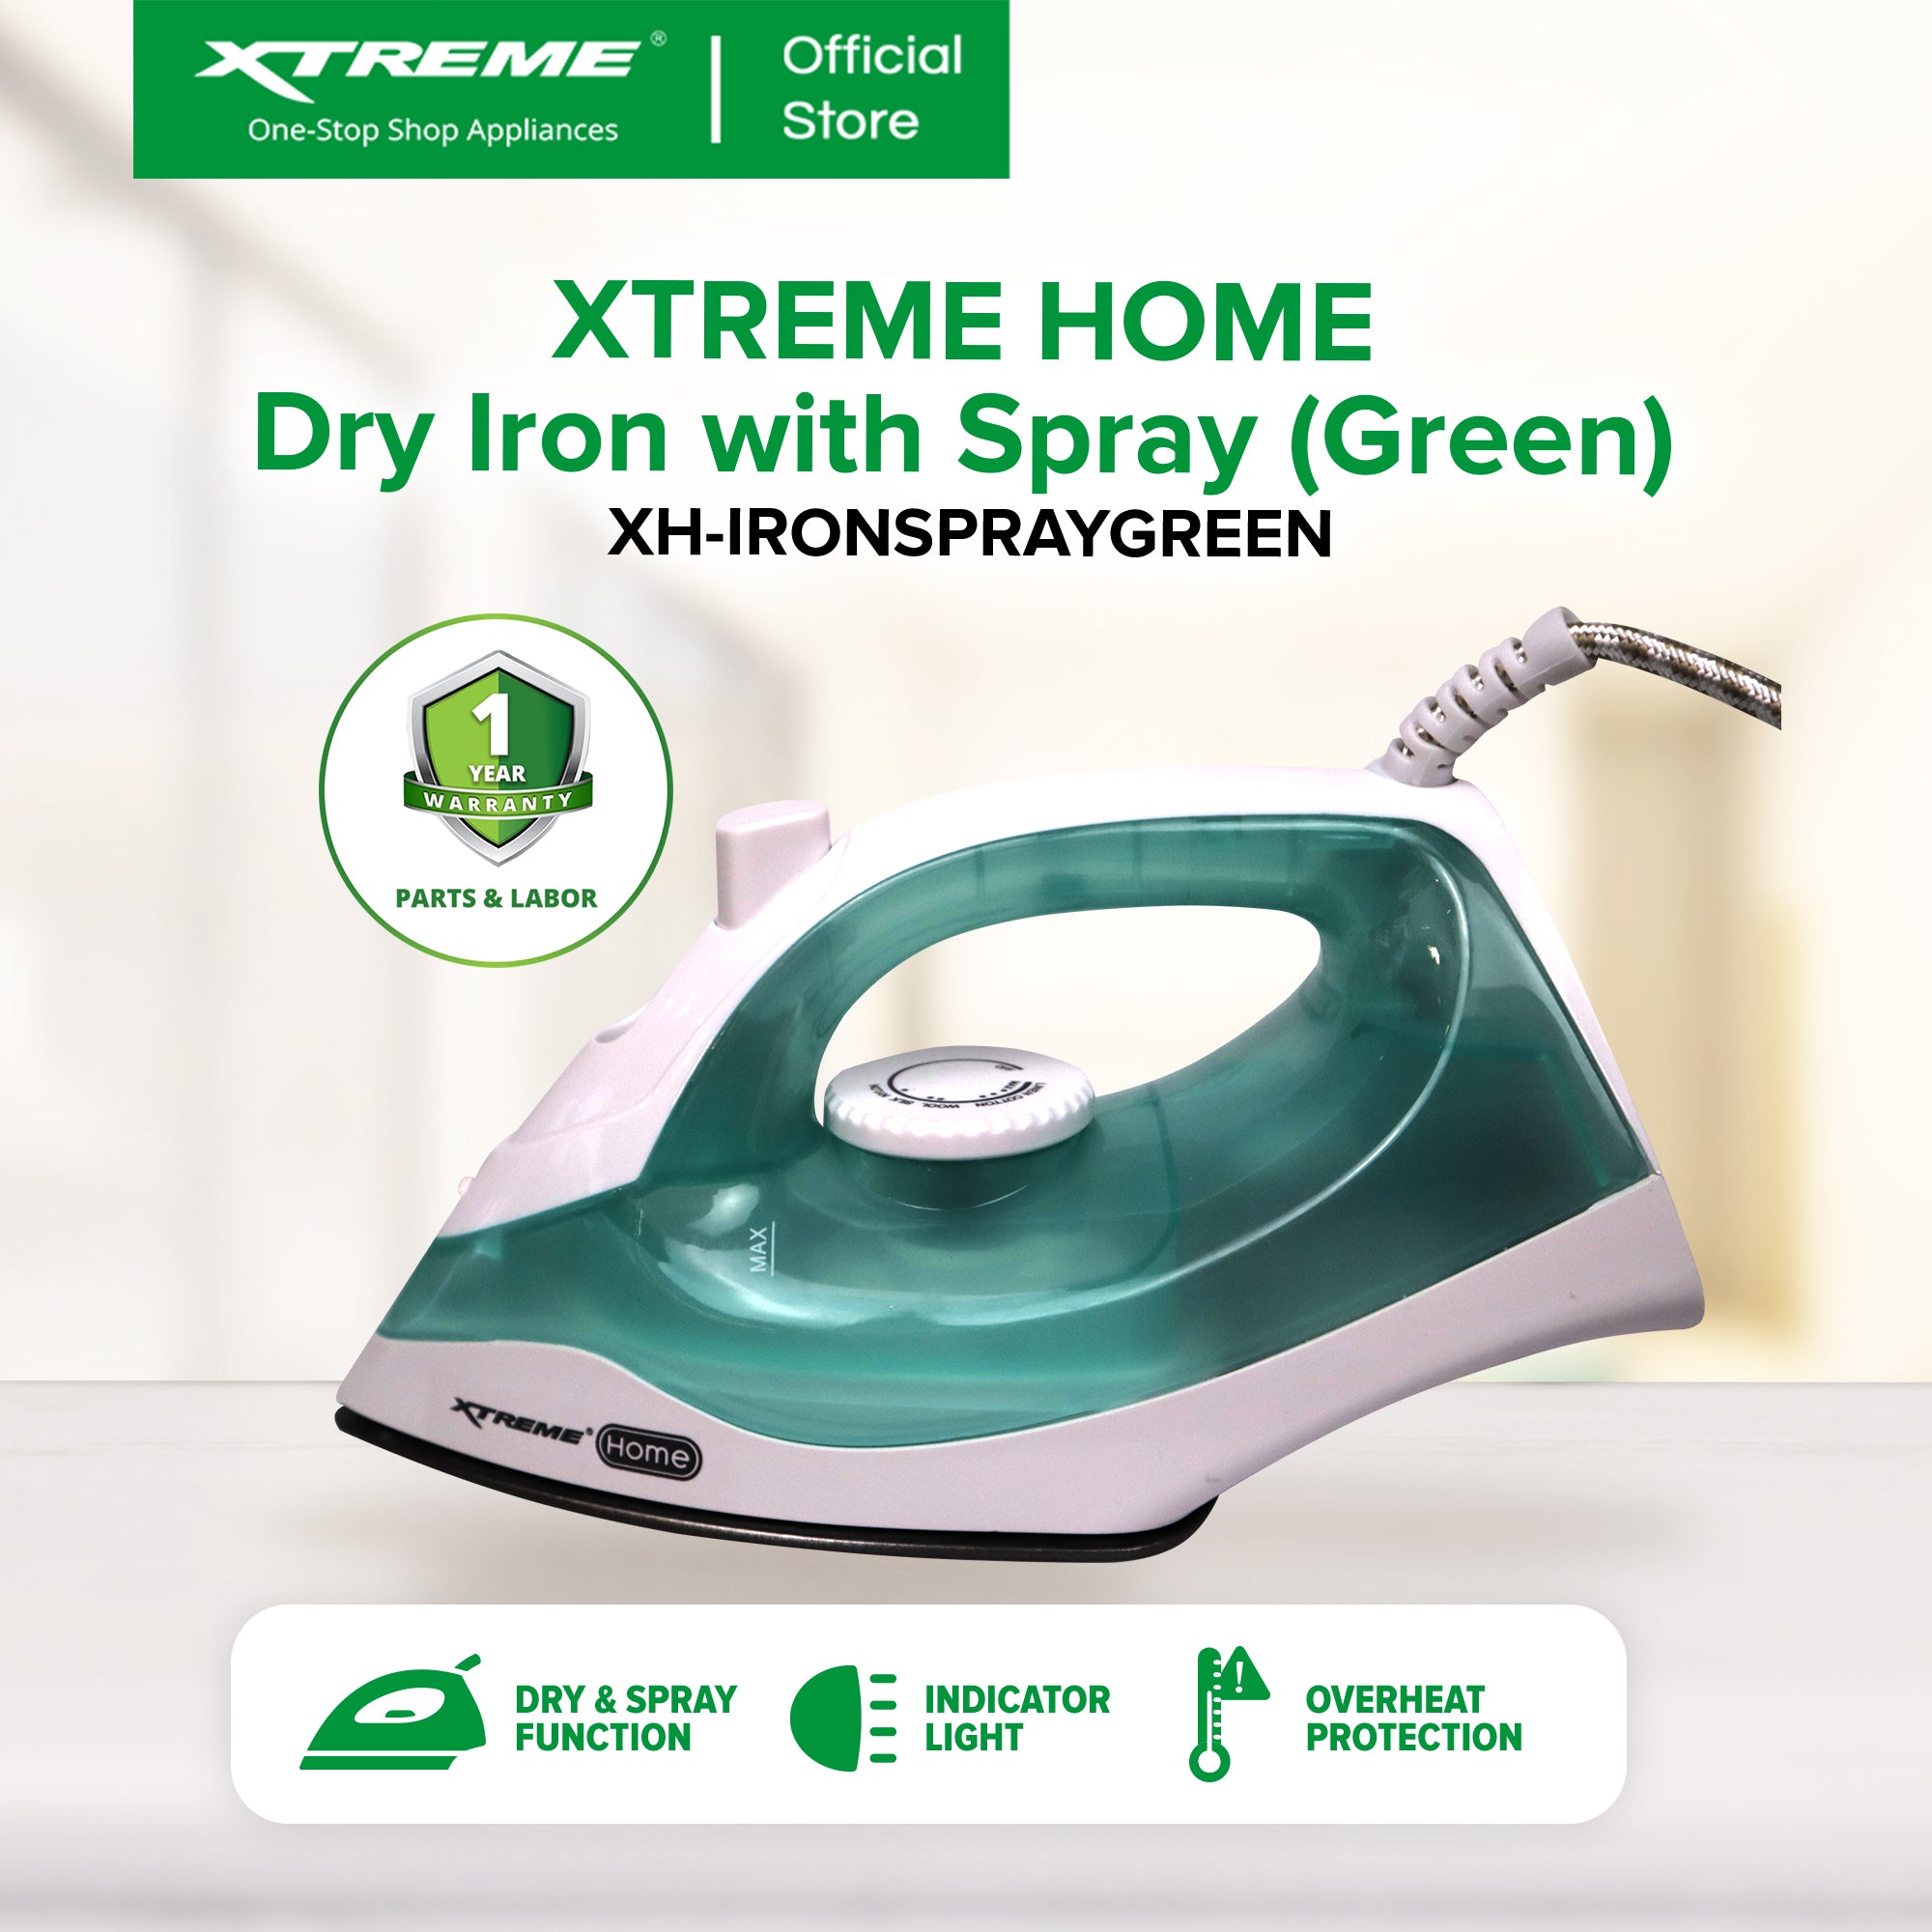 XTREME HOME Dry Iron with Spray (Green) | XH-IRONSPRAYGREEN